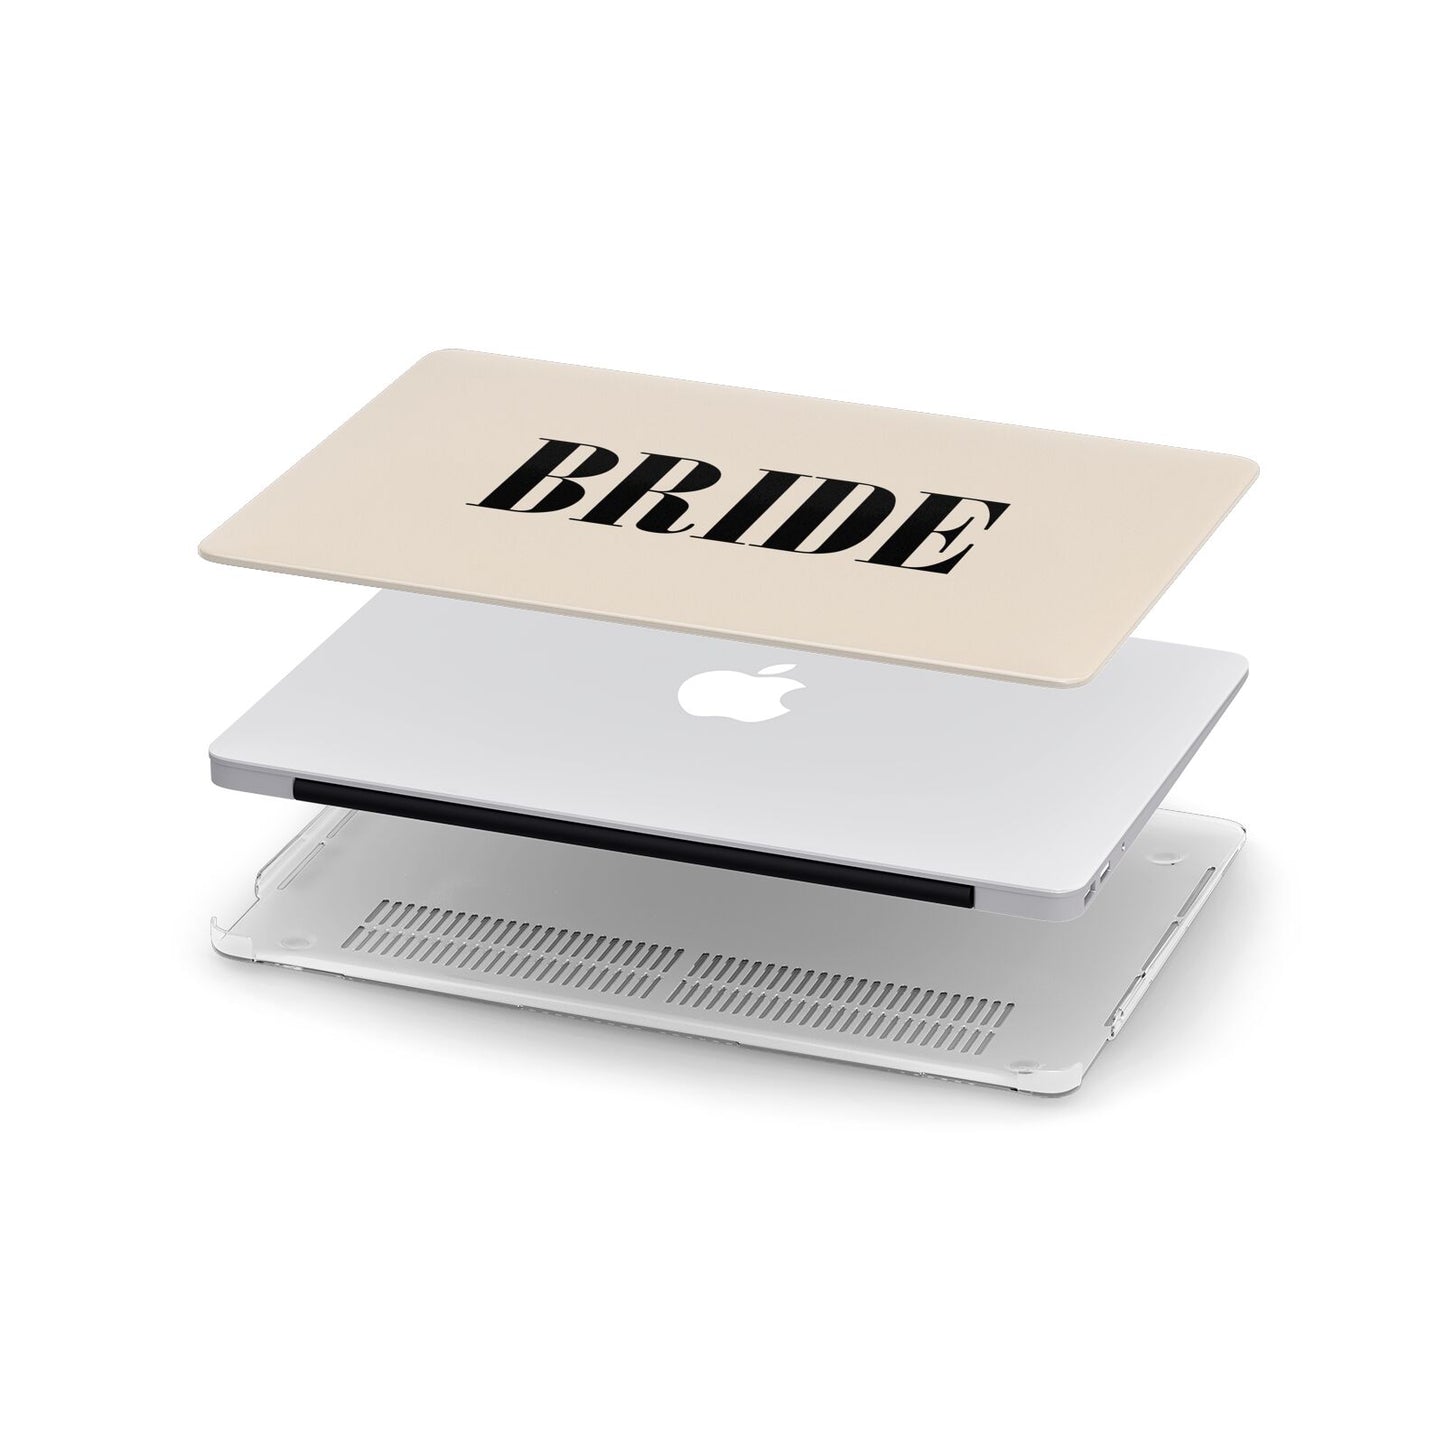 Future Bride Apple MacBook Case in Detail